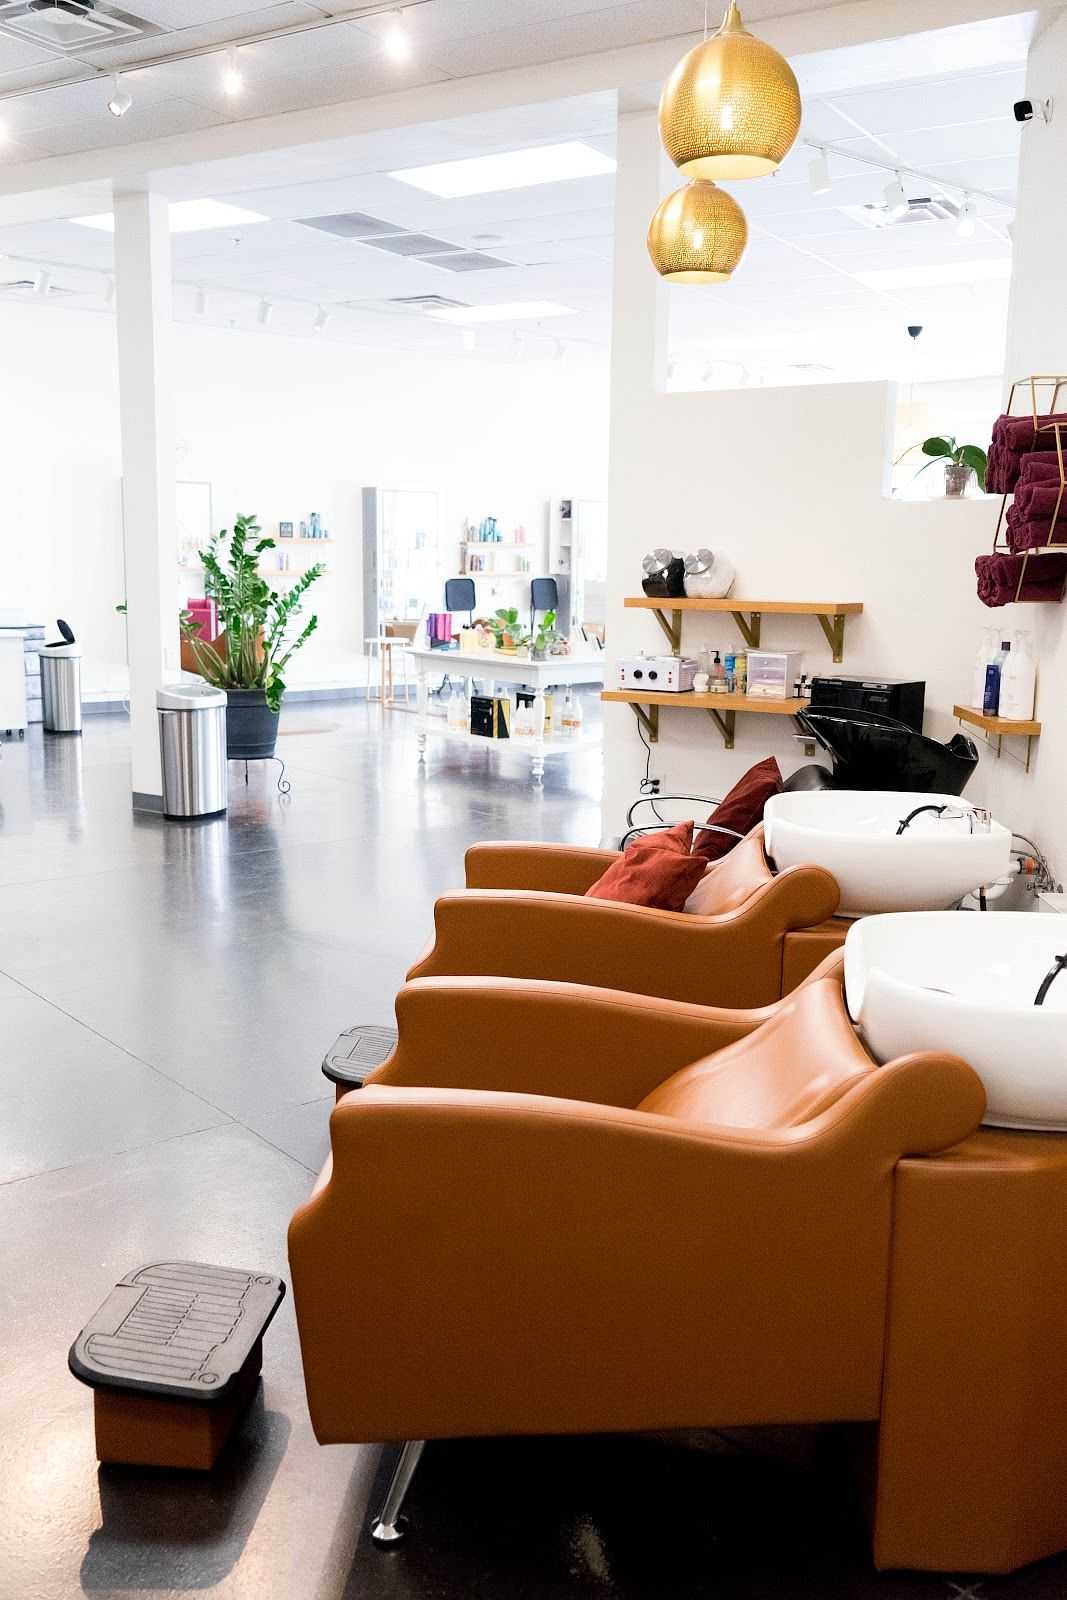 Modern salon interior with orange chairs and hair-washing sinks.